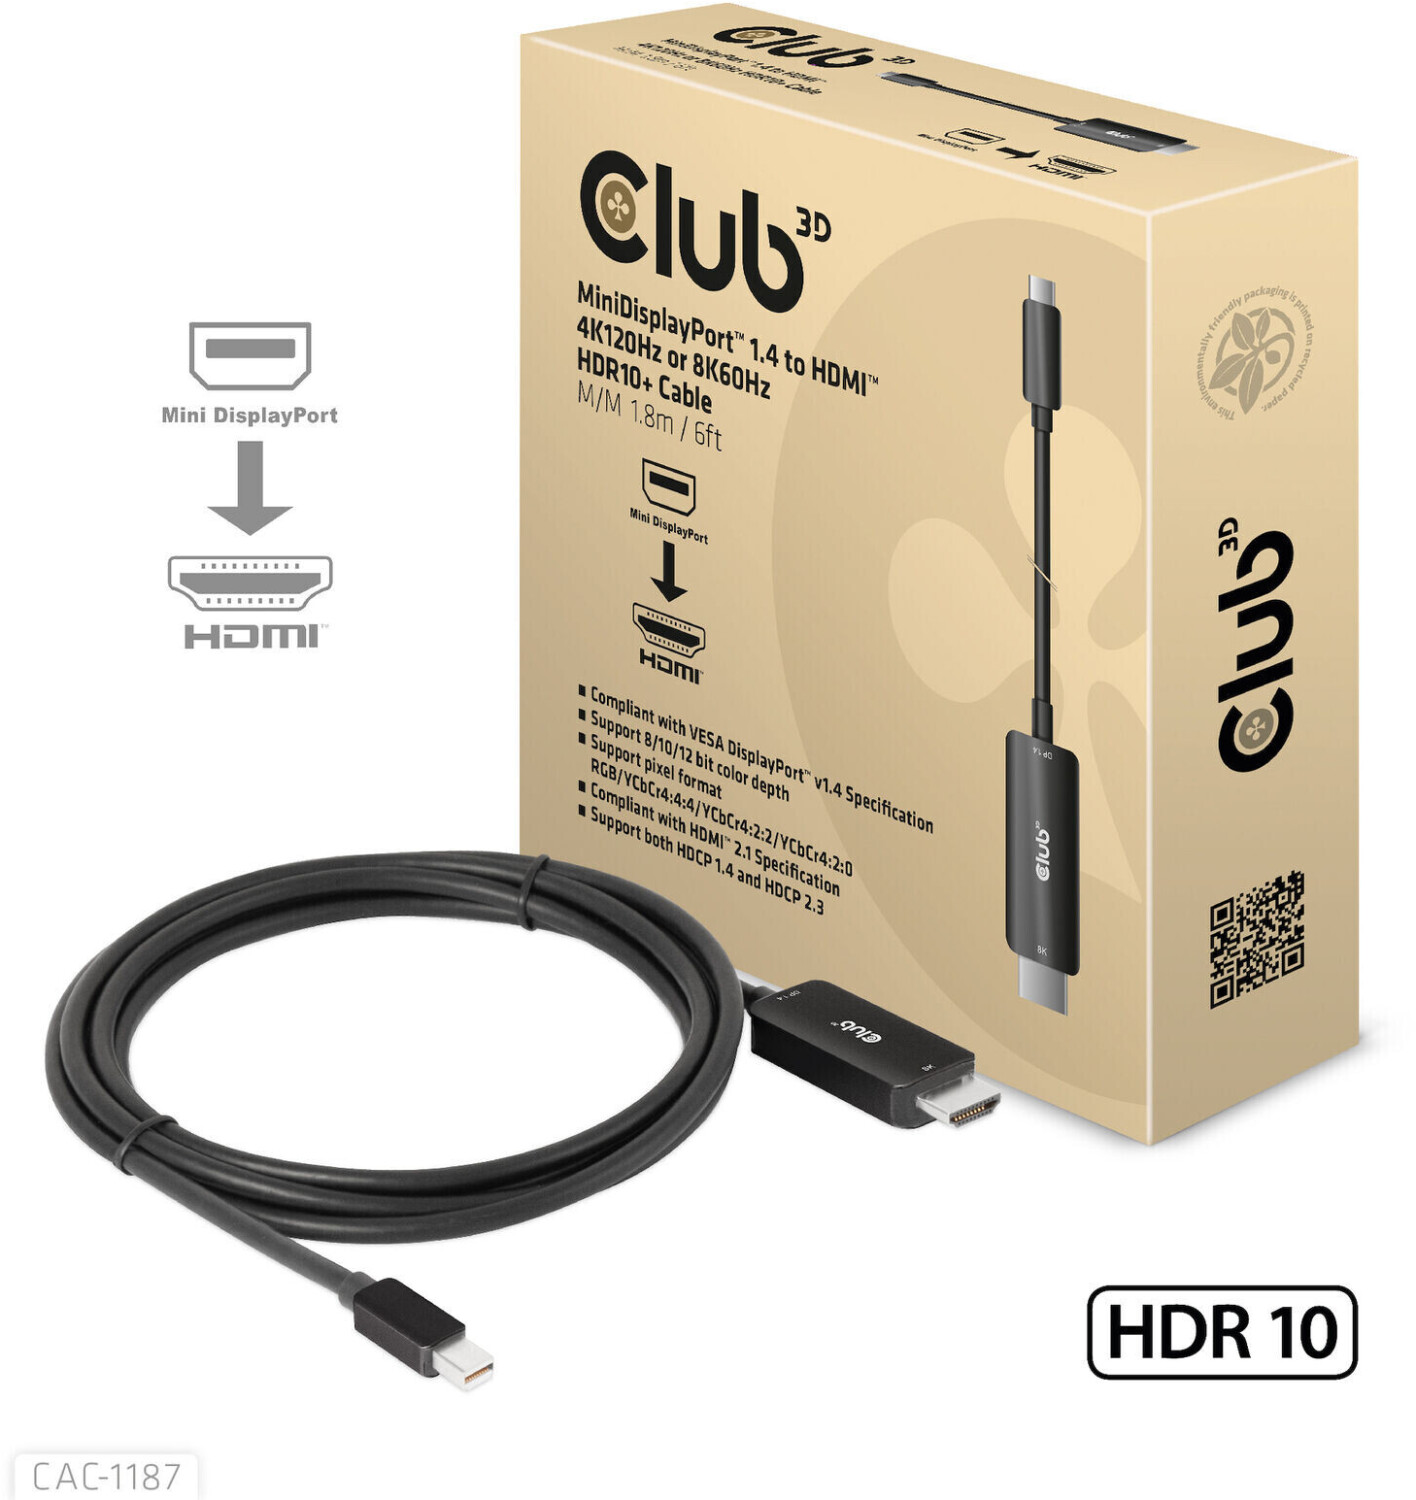 Photos - Cable (video, audio, USB) Club3D CAC-1187 